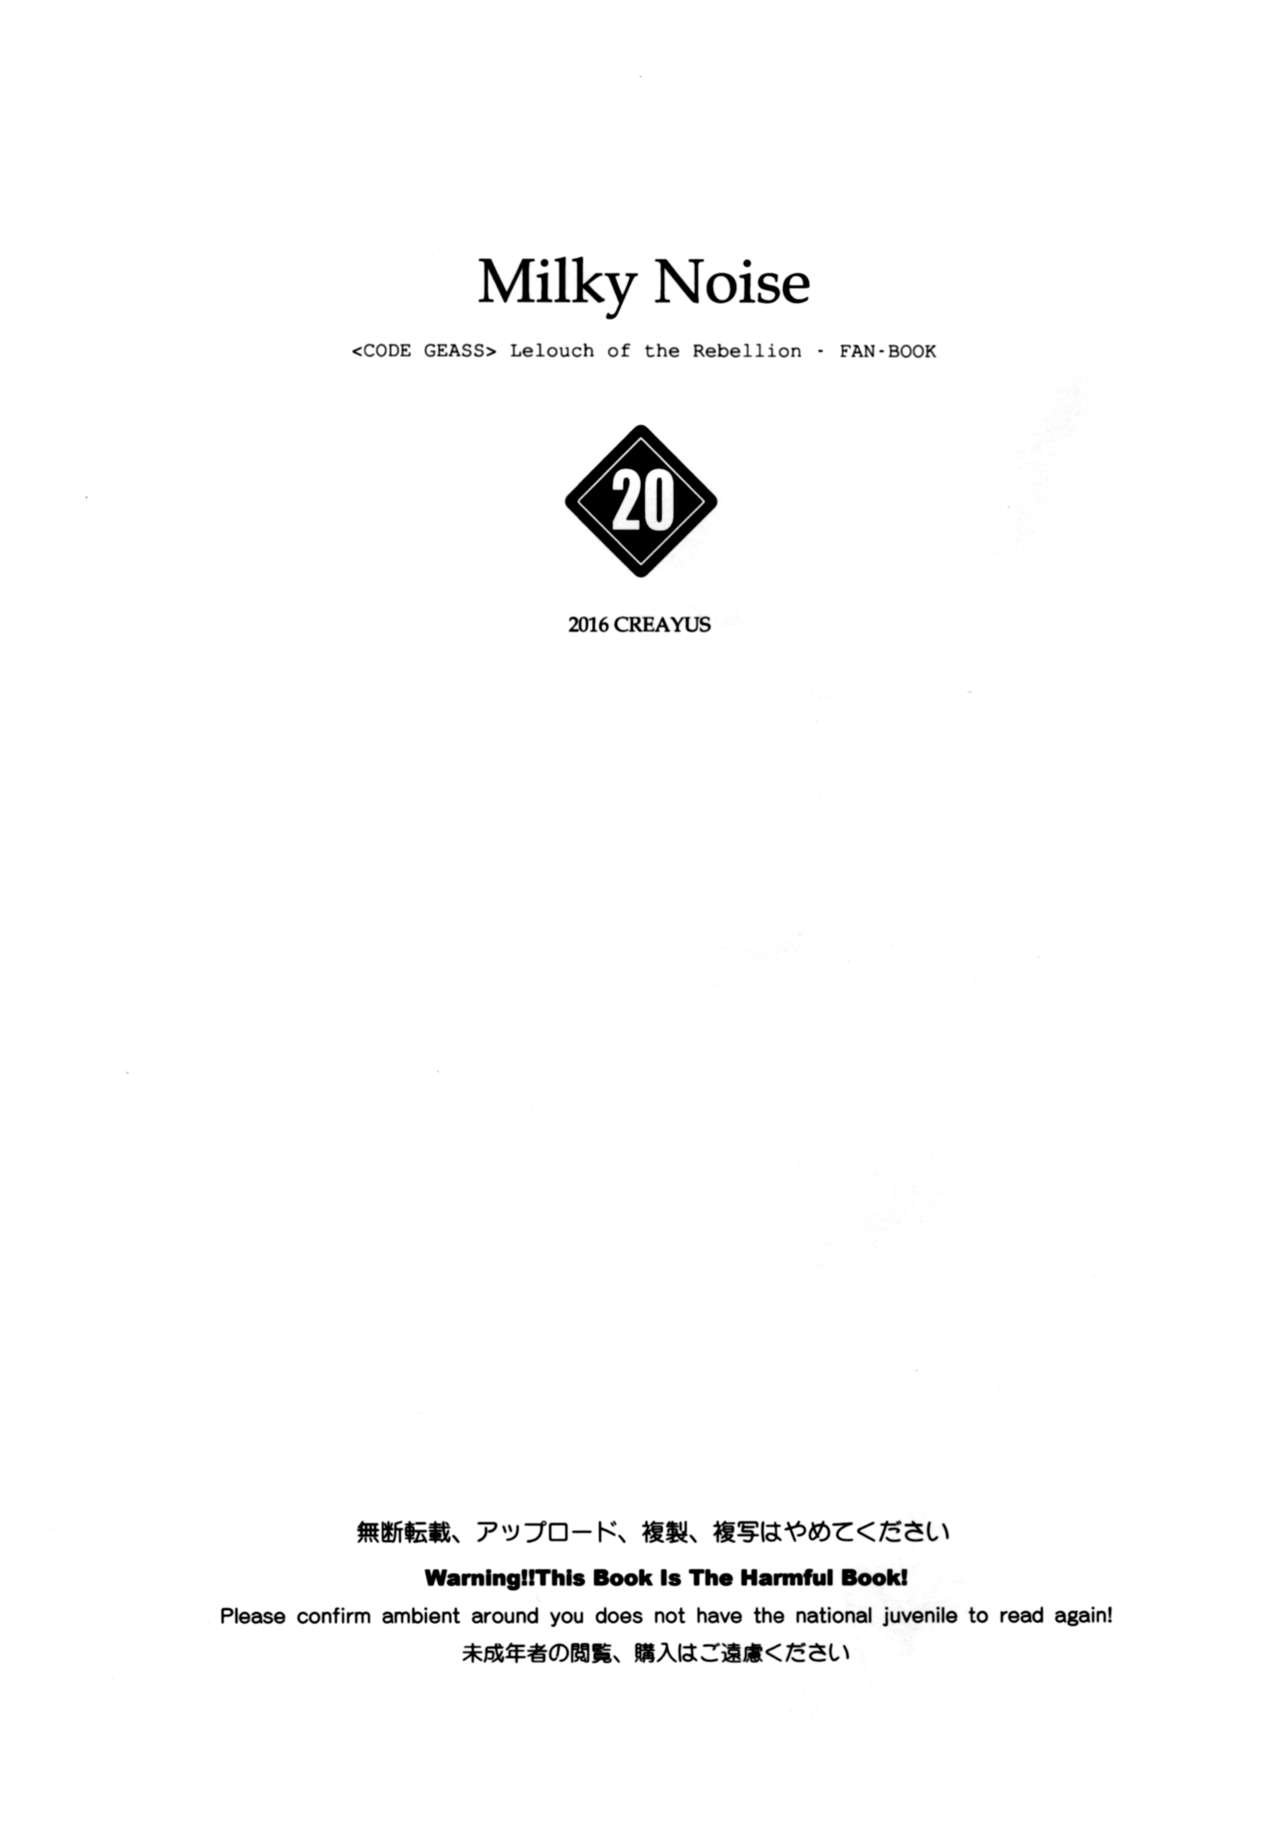 Milky Noise - 2